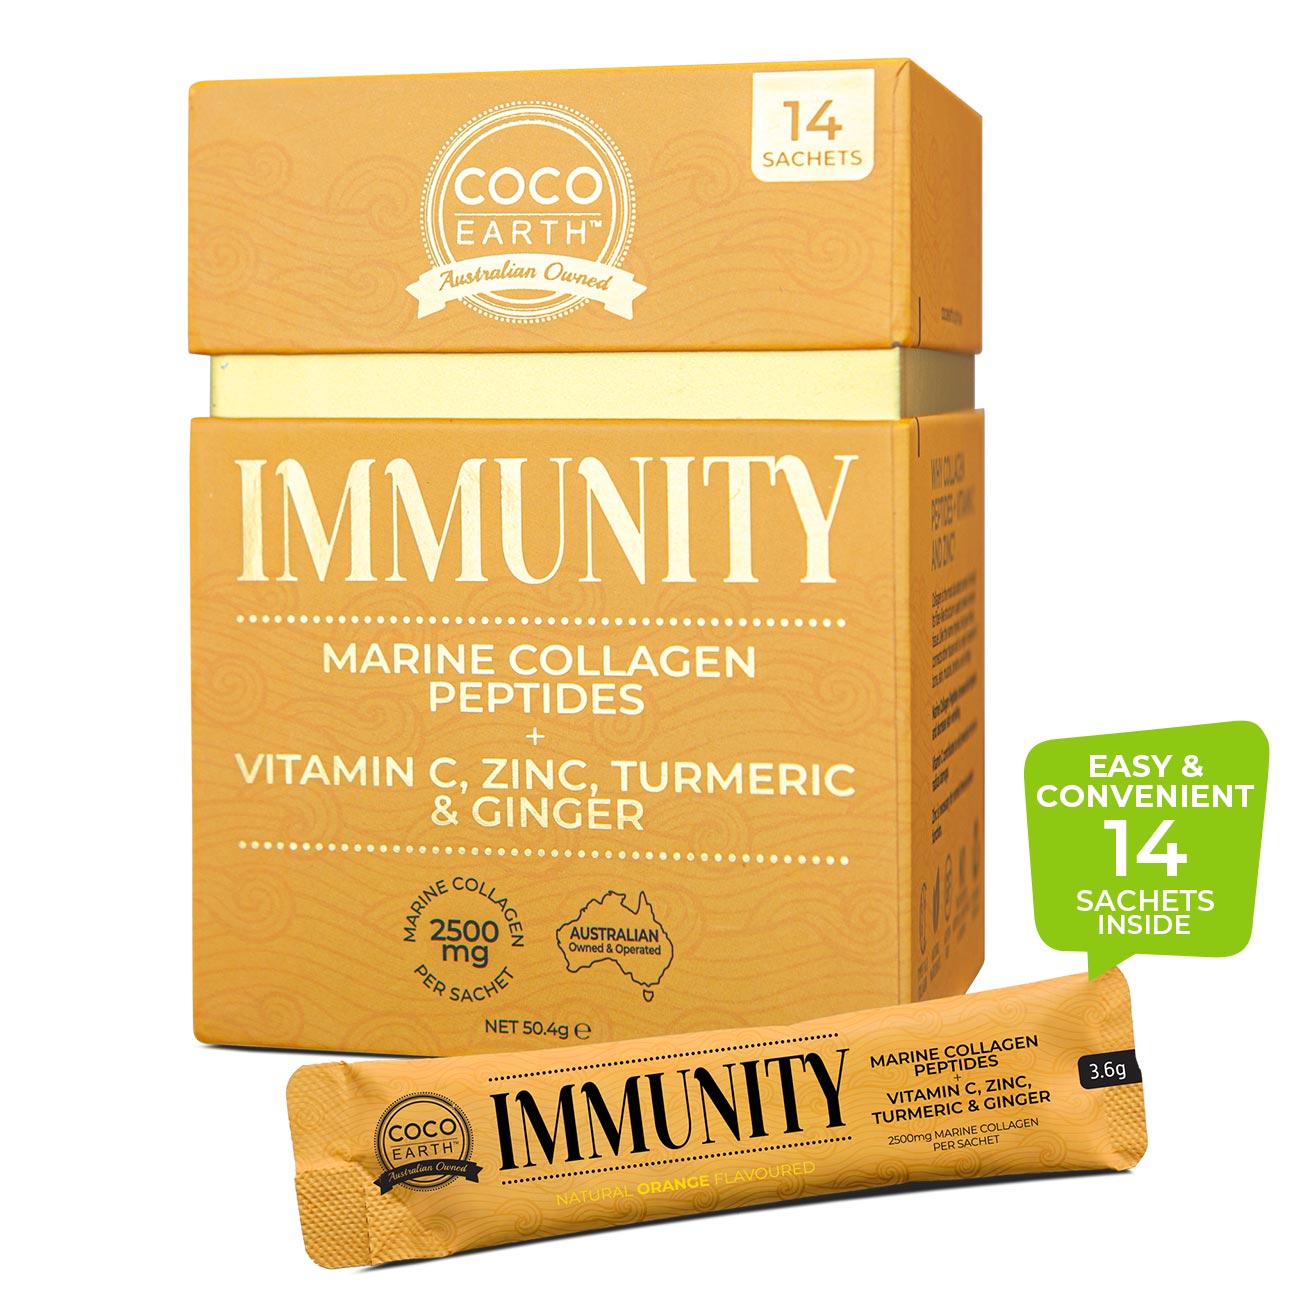 Coco Earth M/Collagen + Immunity Sachet 3.6g x 14 Sachets